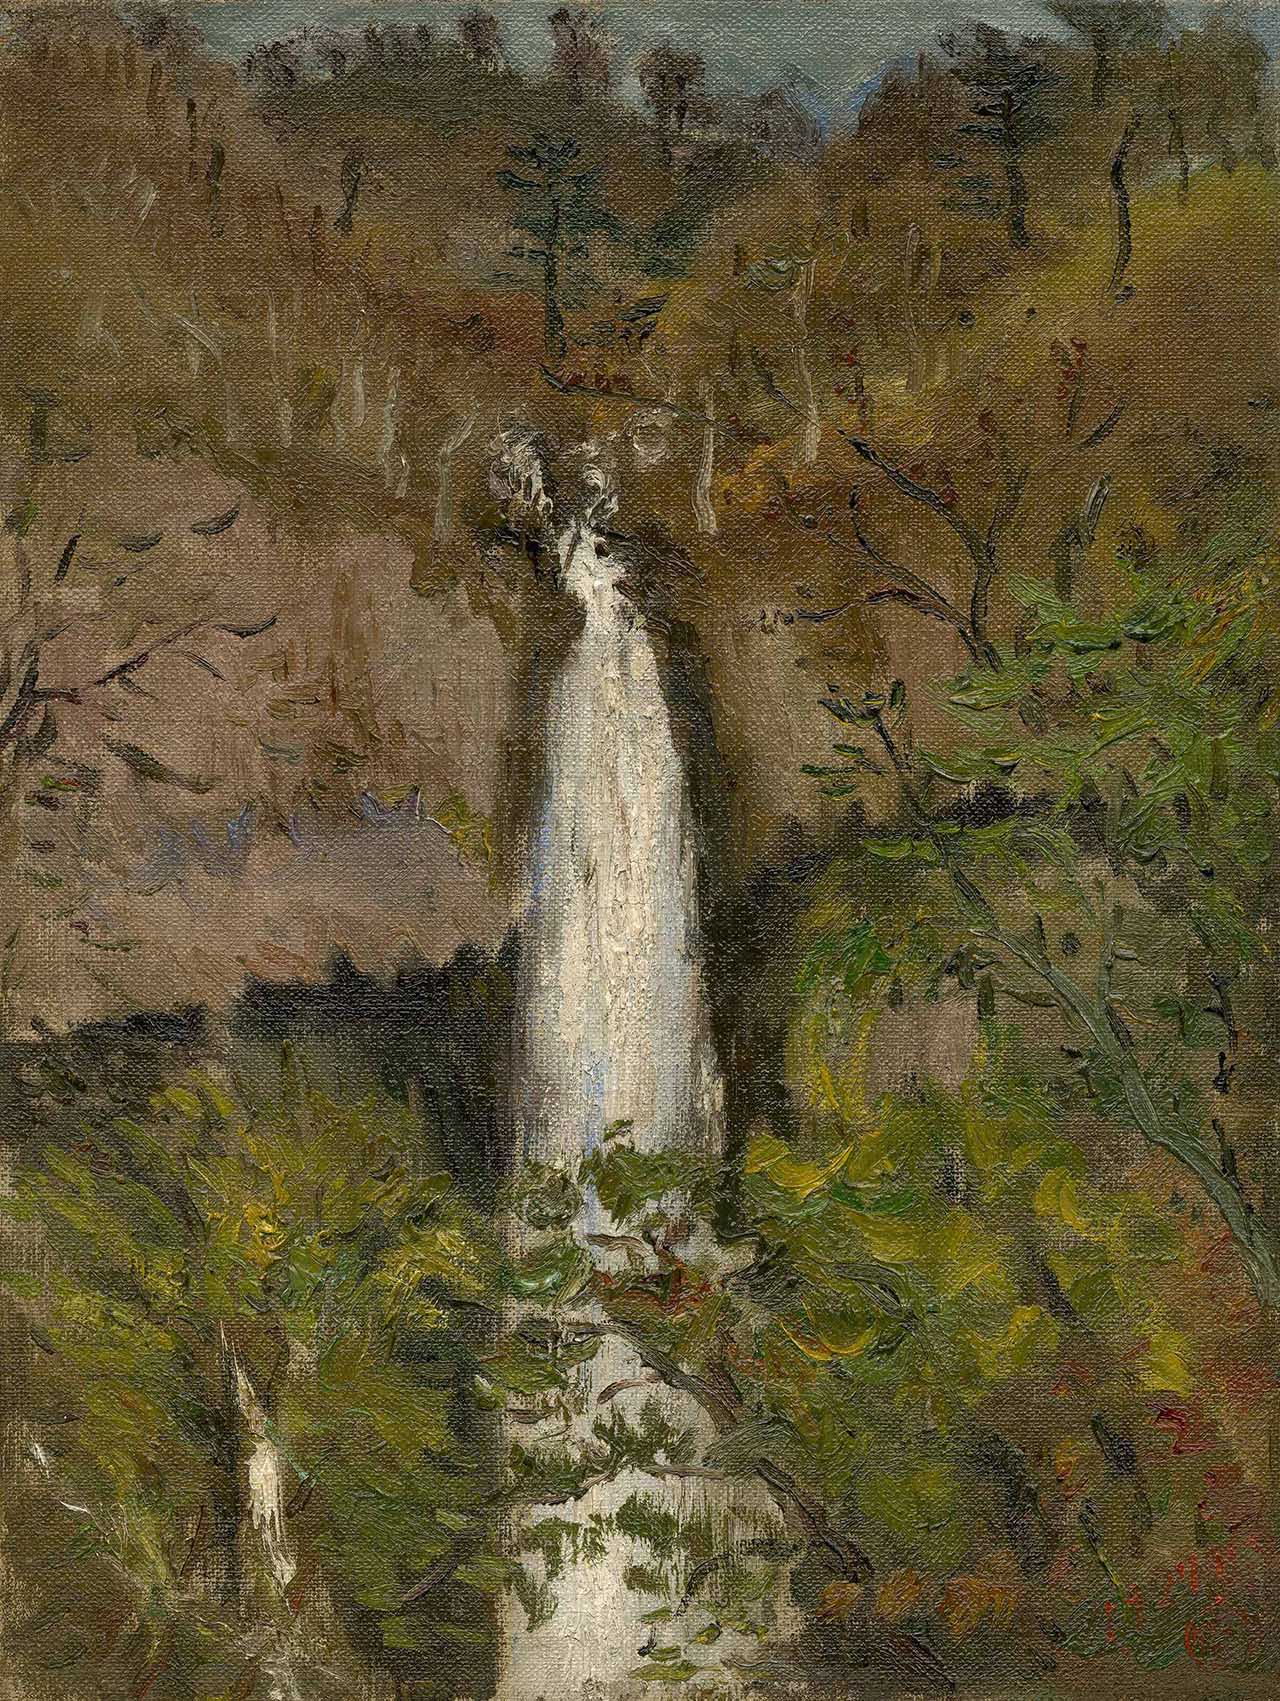 Kegon Waterfall Oil on canvas 41.2x32.6